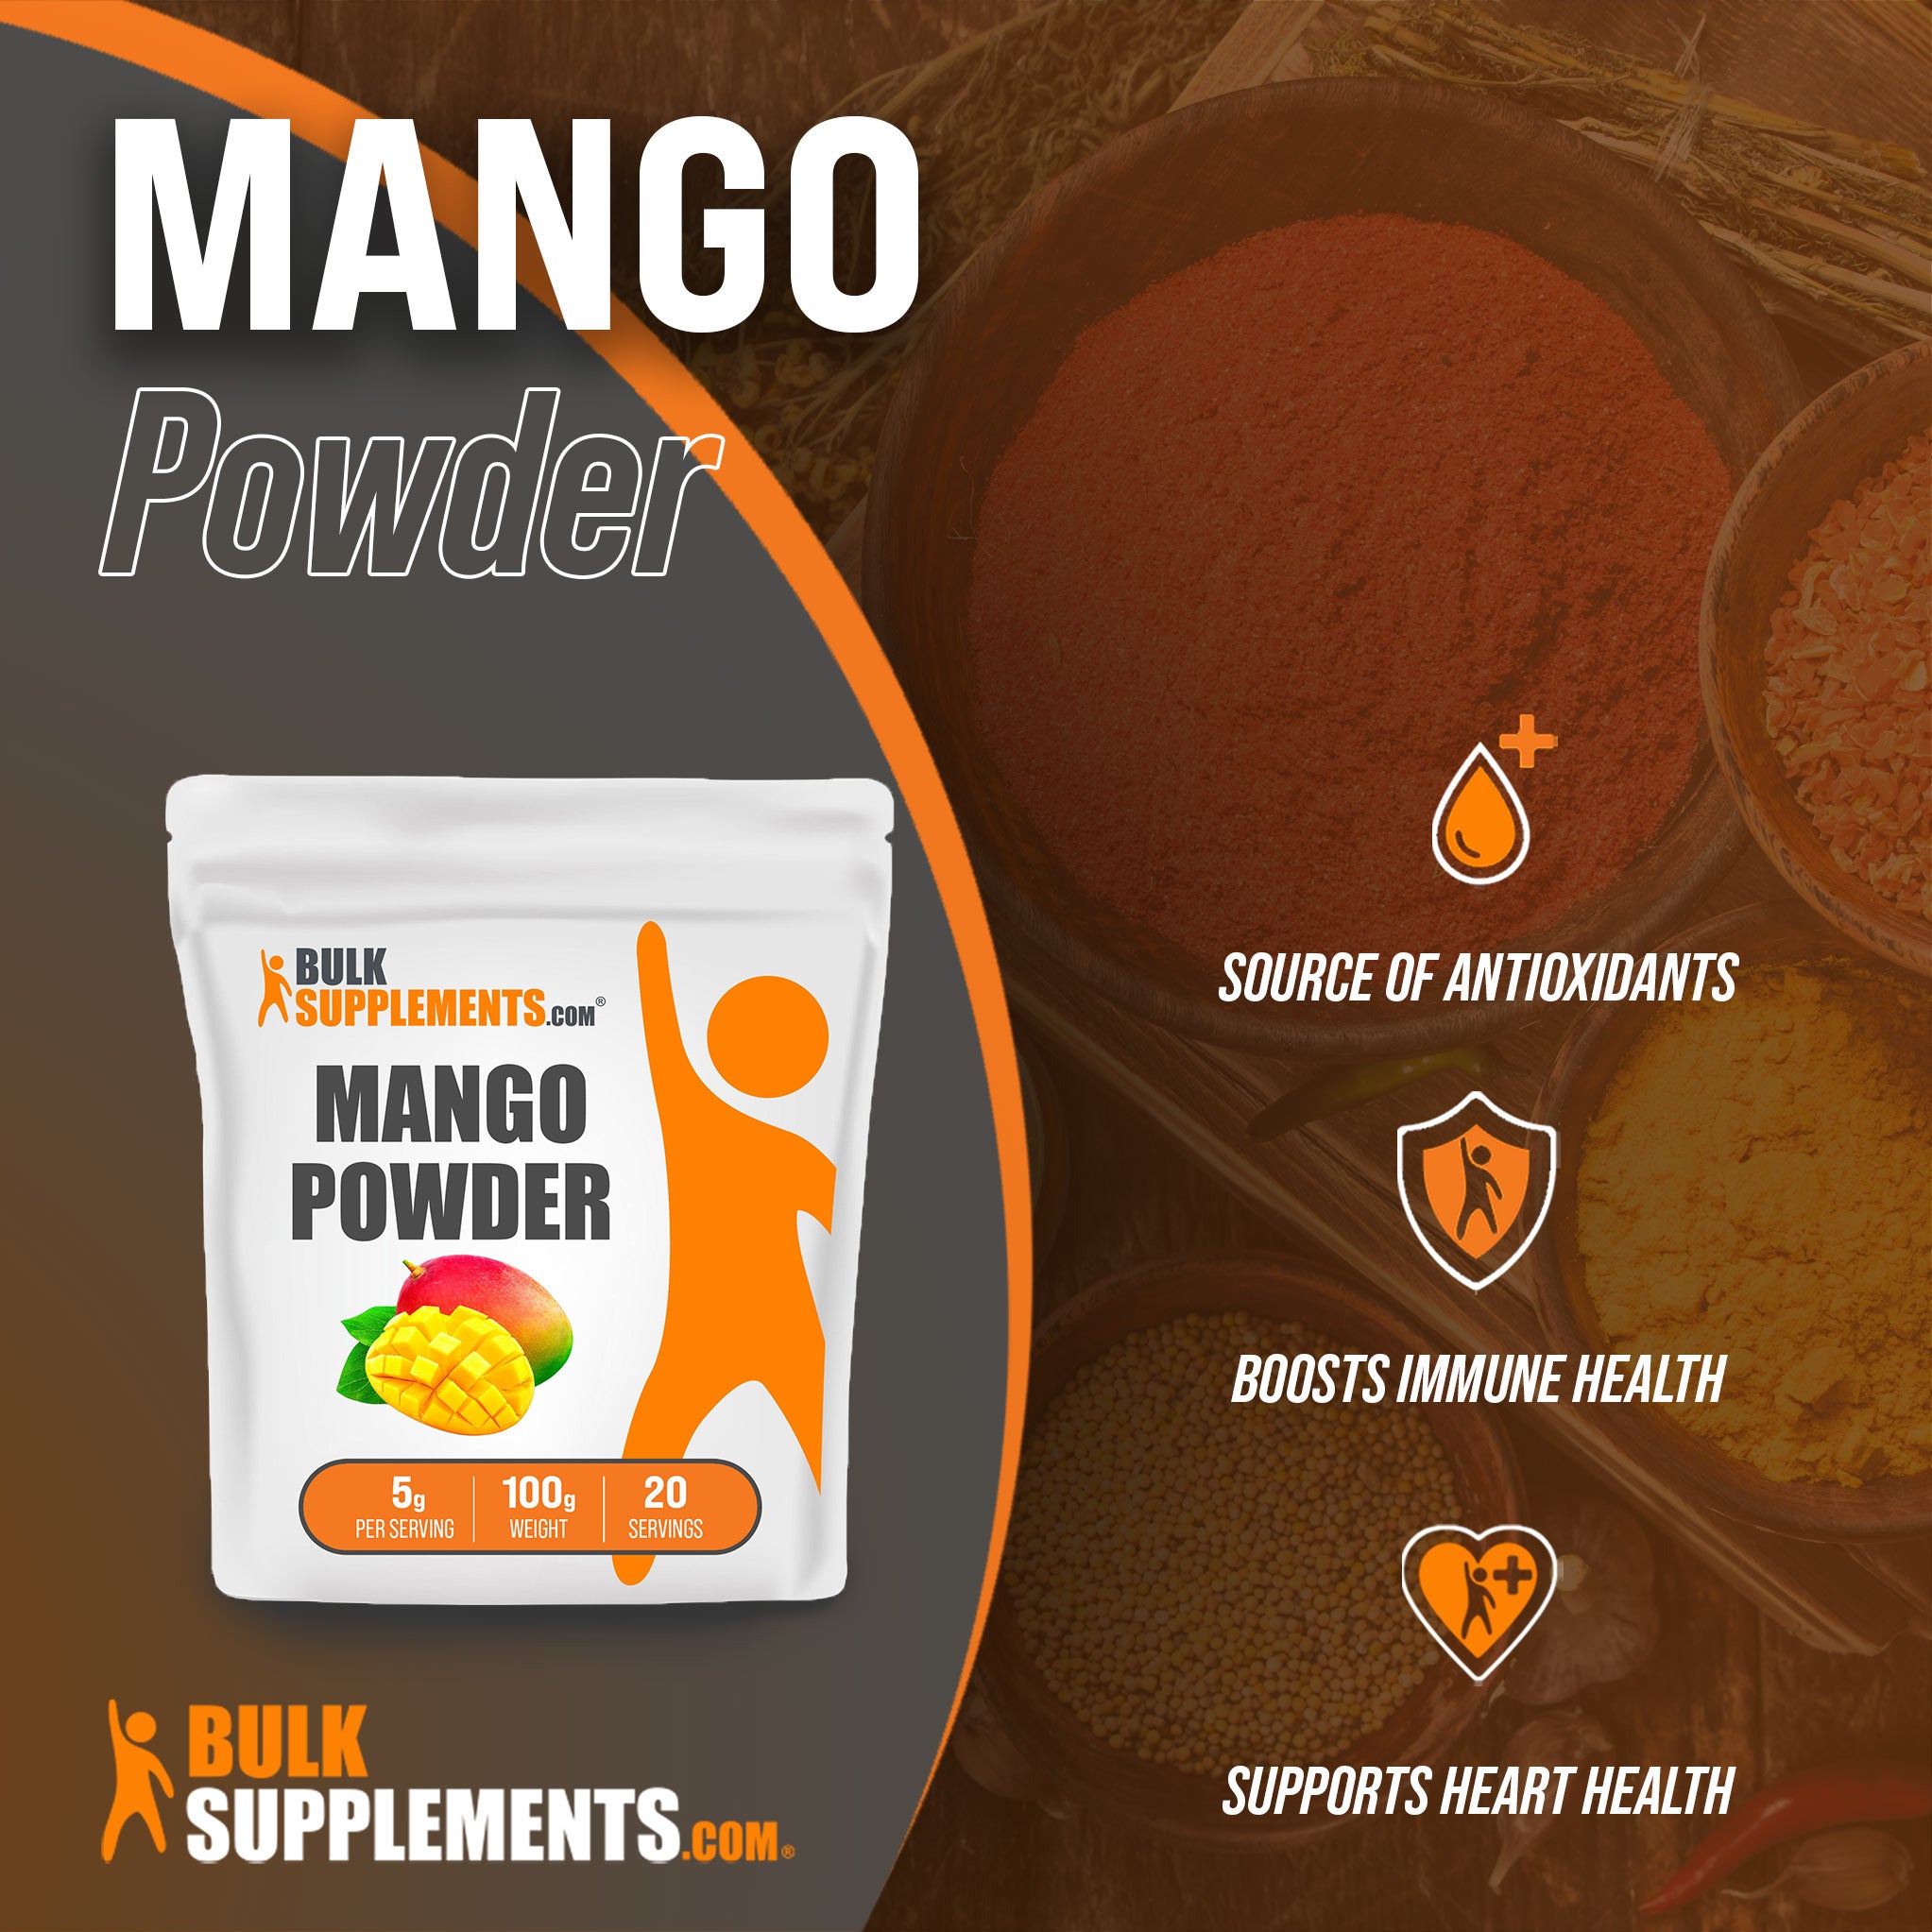 Benefits of Mango Powder: source of antioxidants, boosts immune health, supports heart health